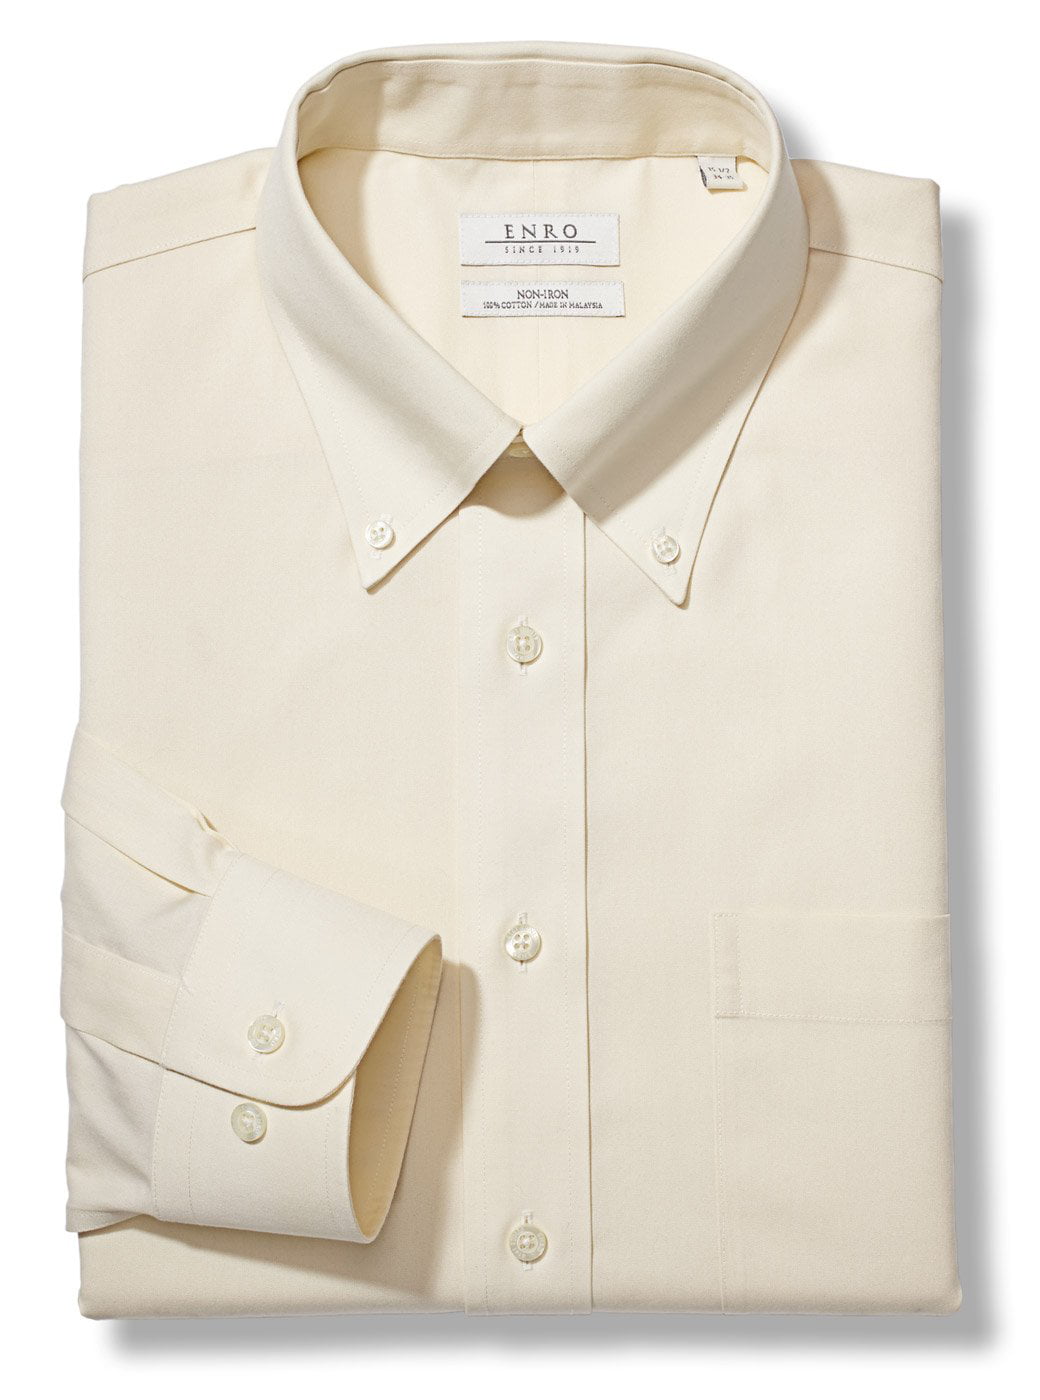 Enro Mens Nelson Check Non-Iron Classic Fit Dress Shirt